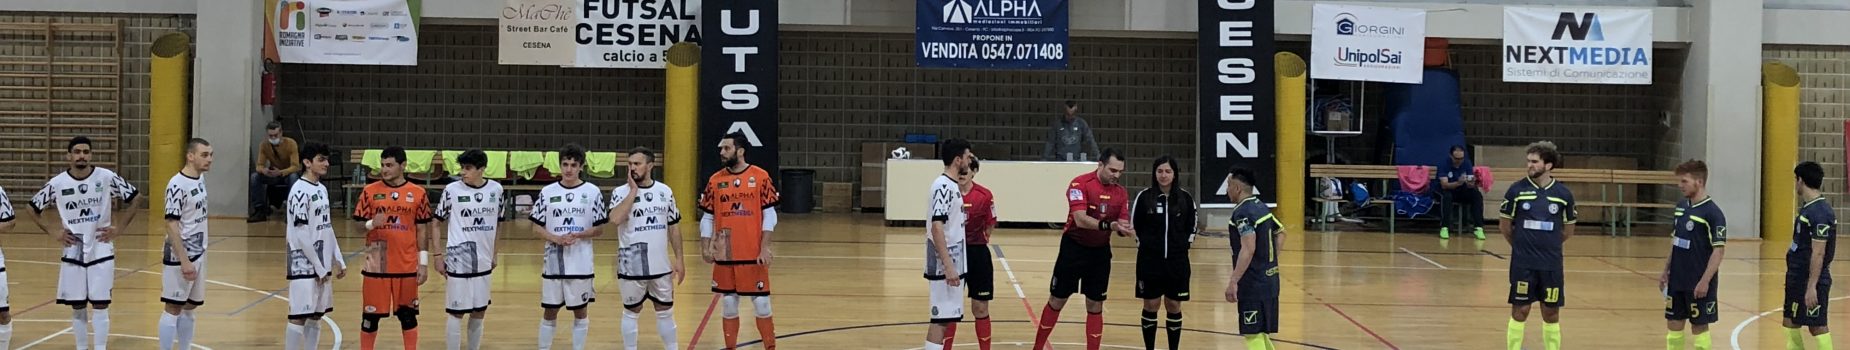 Futsal Cesena-Athletic C5 8-2